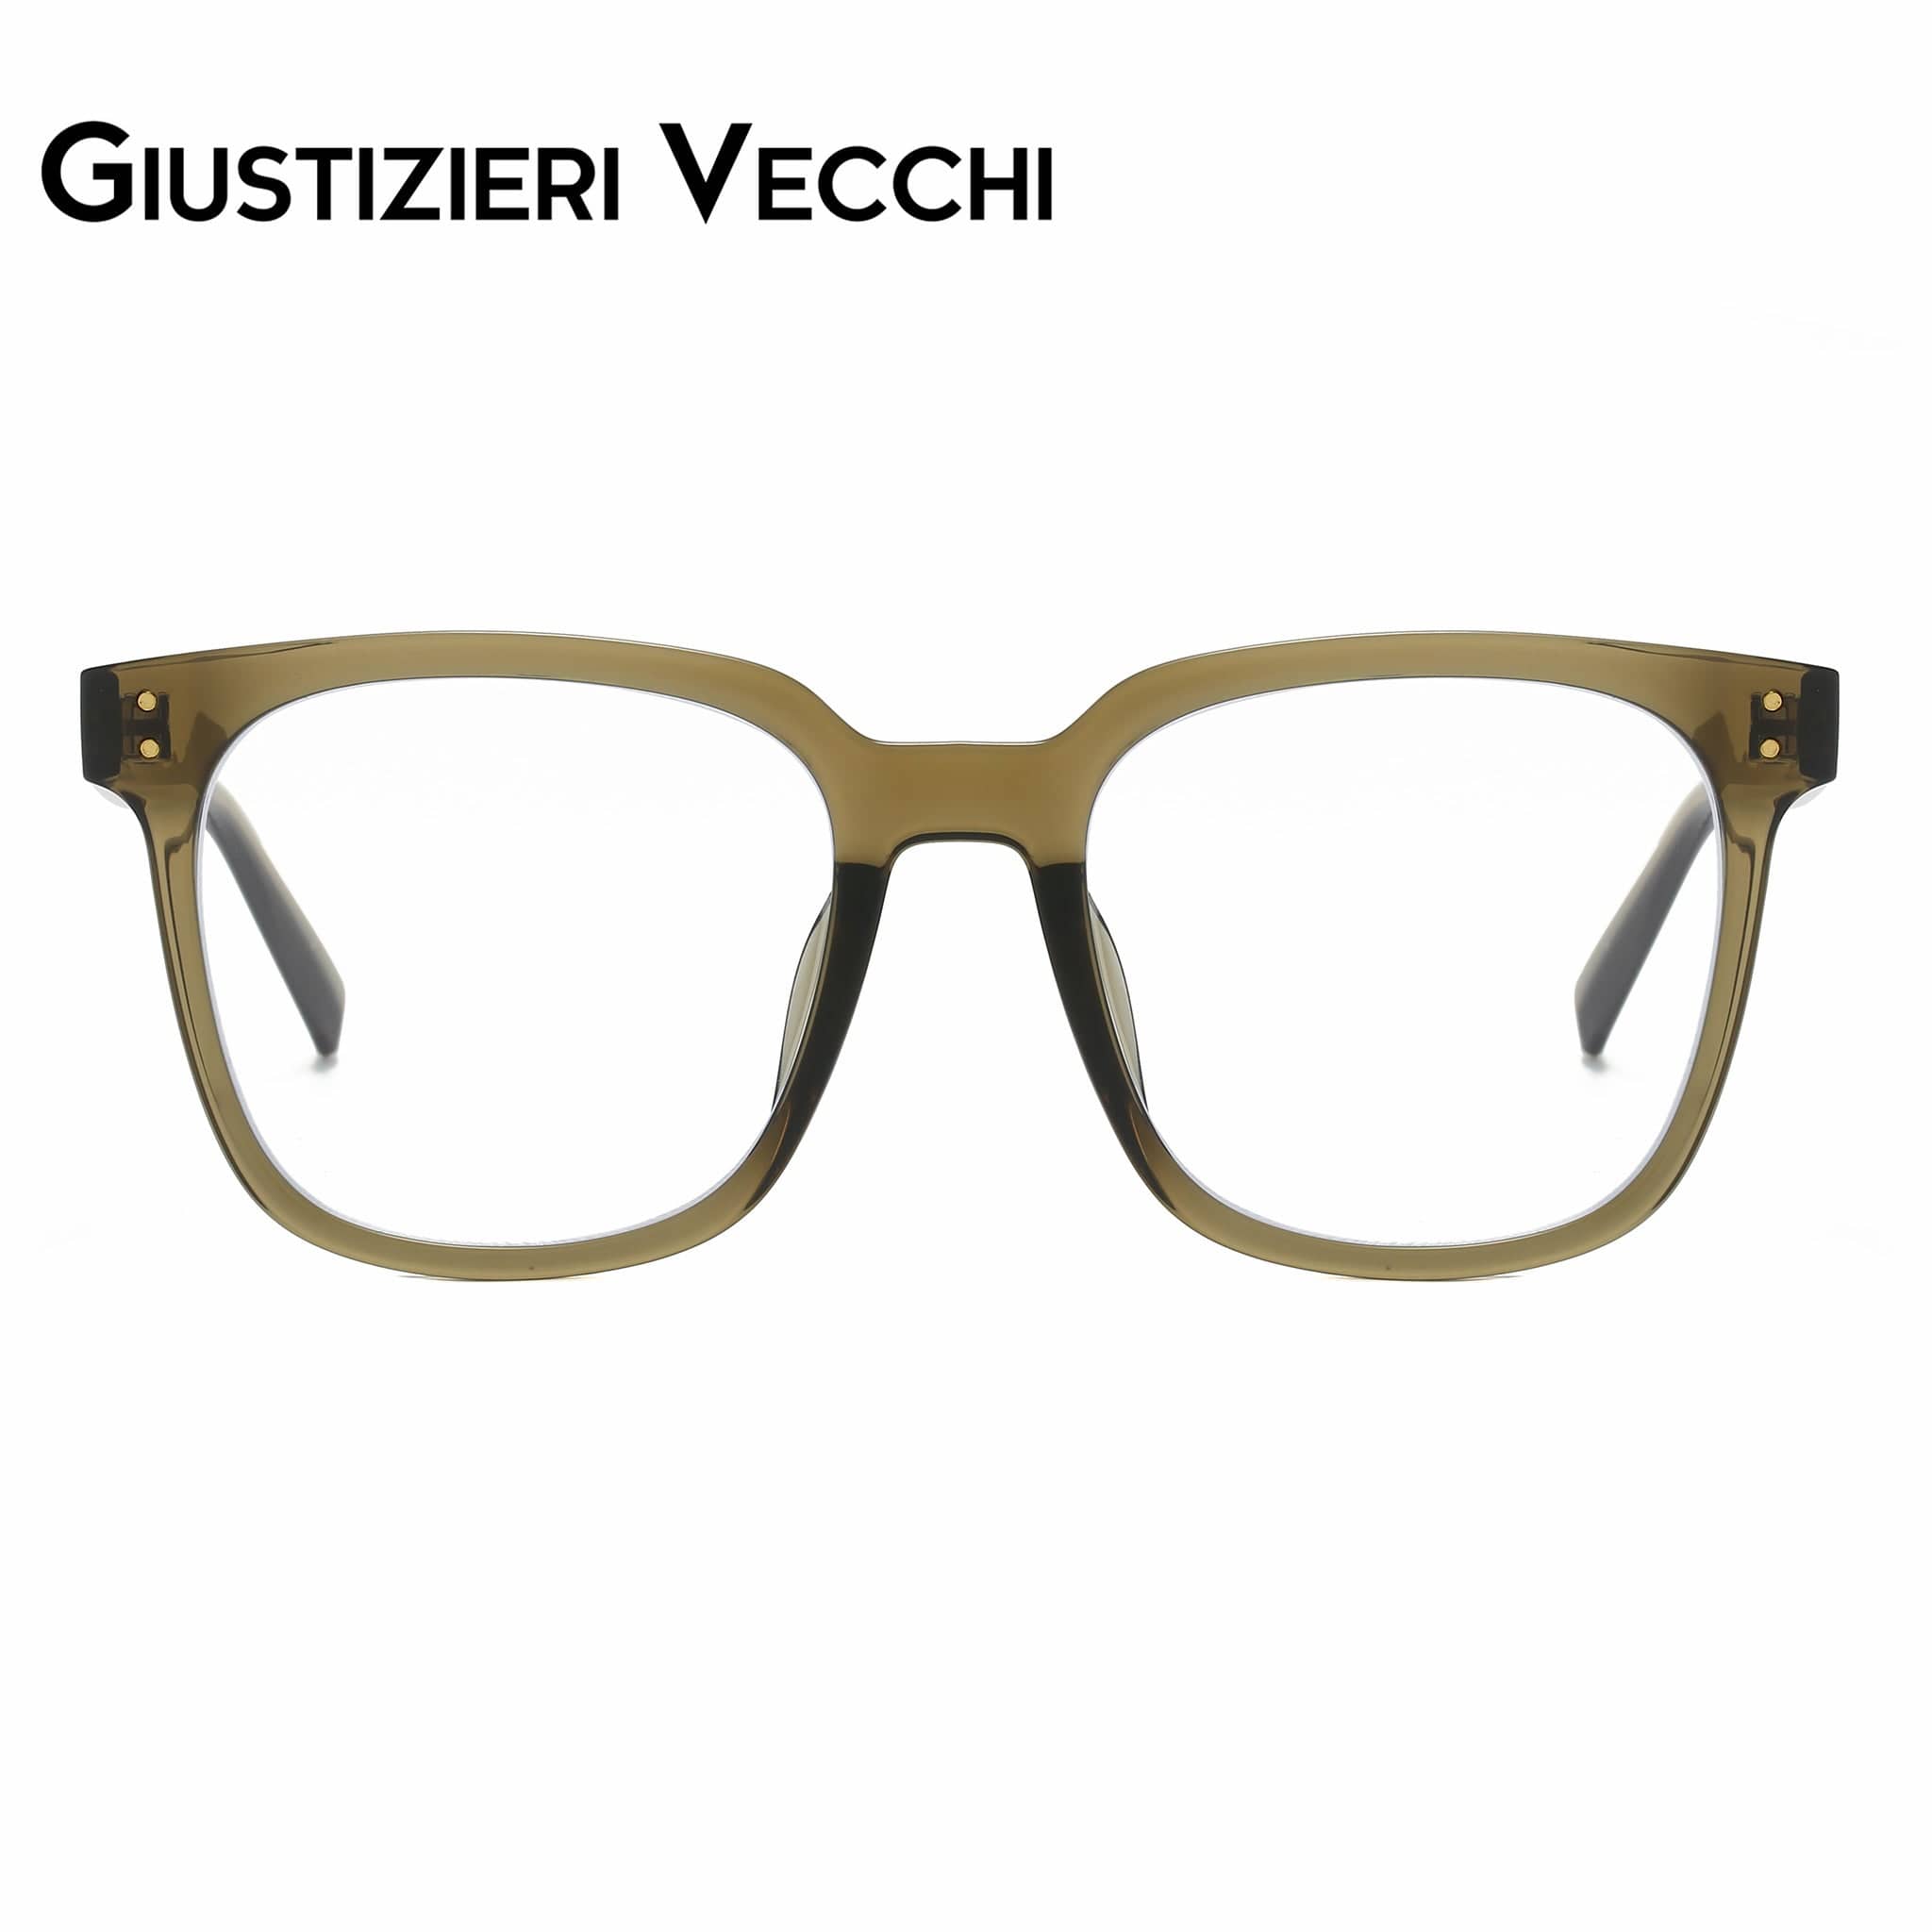 GIUSTIZIERI VECCHI Eyeglasses Medium / Dark Beige Crystal Gioia Duo